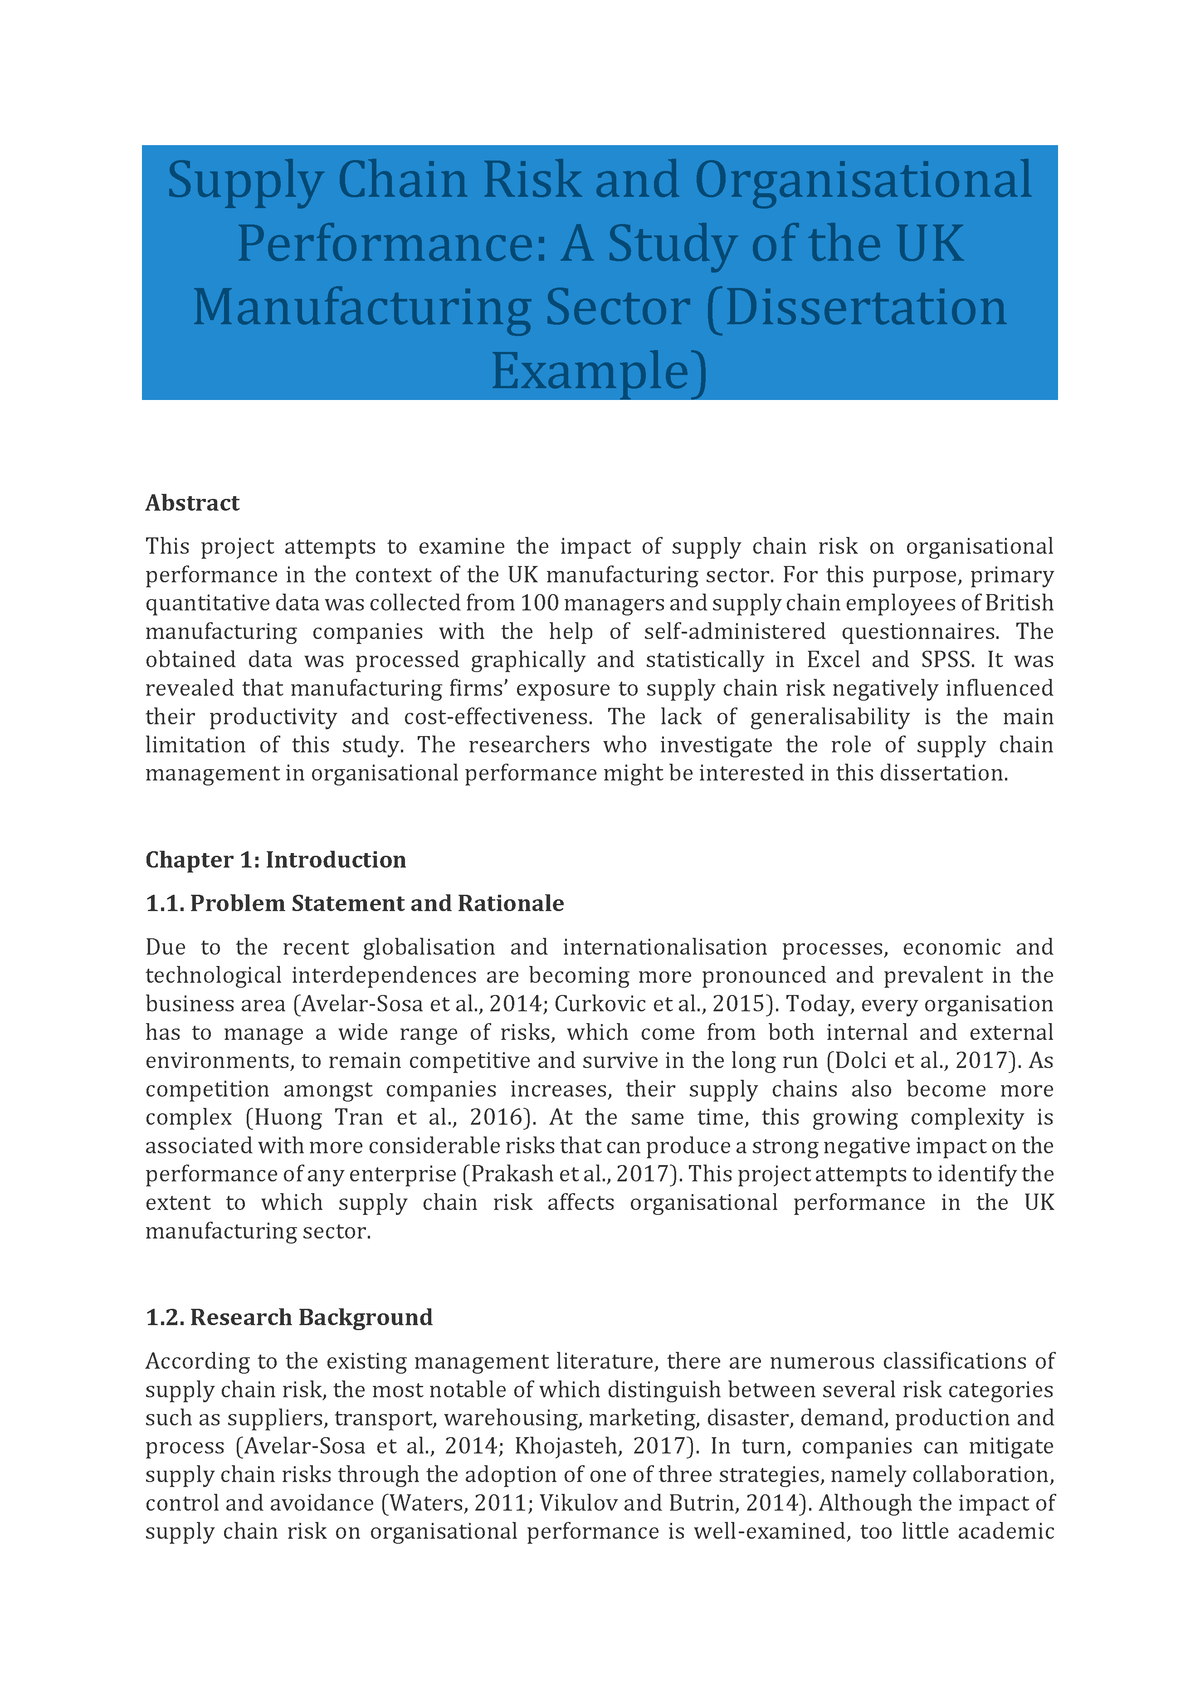 supply chain management dissertation titles